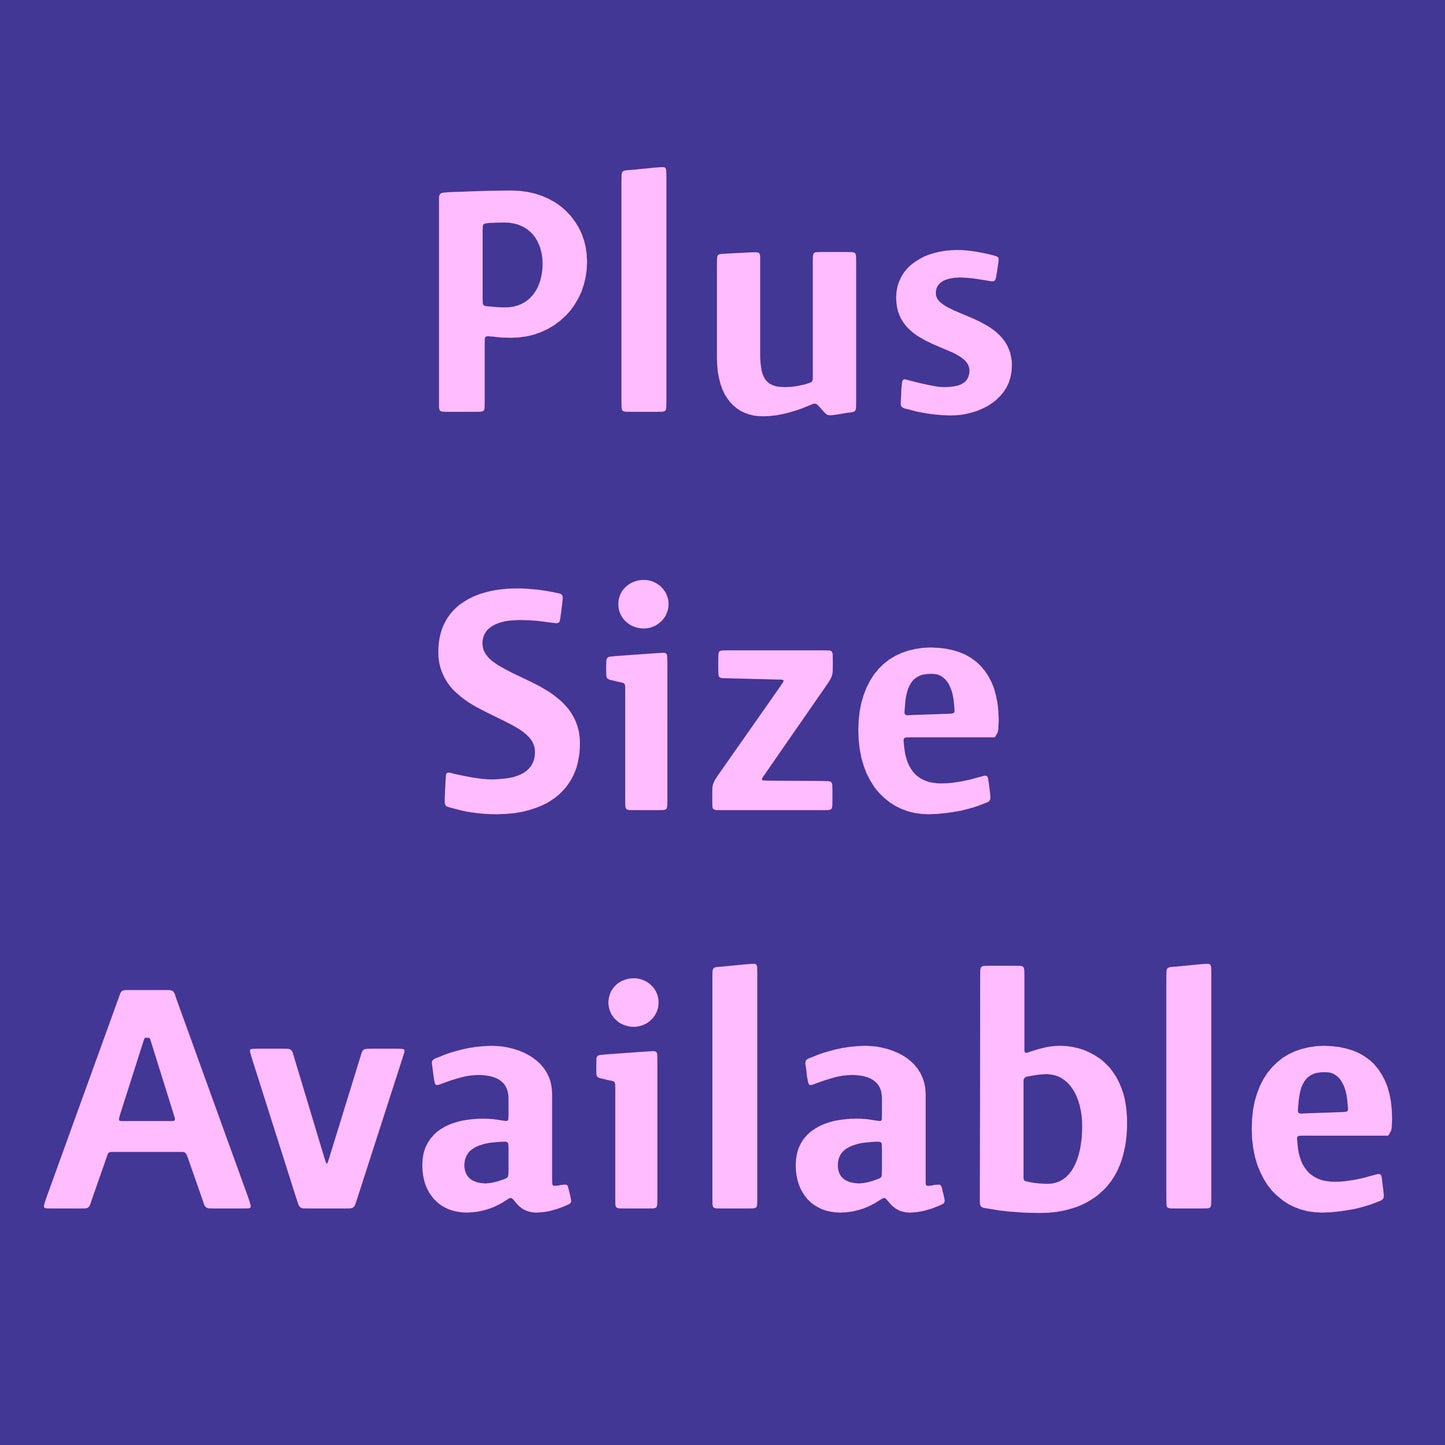 Lavish Blue/Purple Hologram Short Bustier Top in Size S, M, L, XL, 2X, 3X, 4X, 5X, or 6X